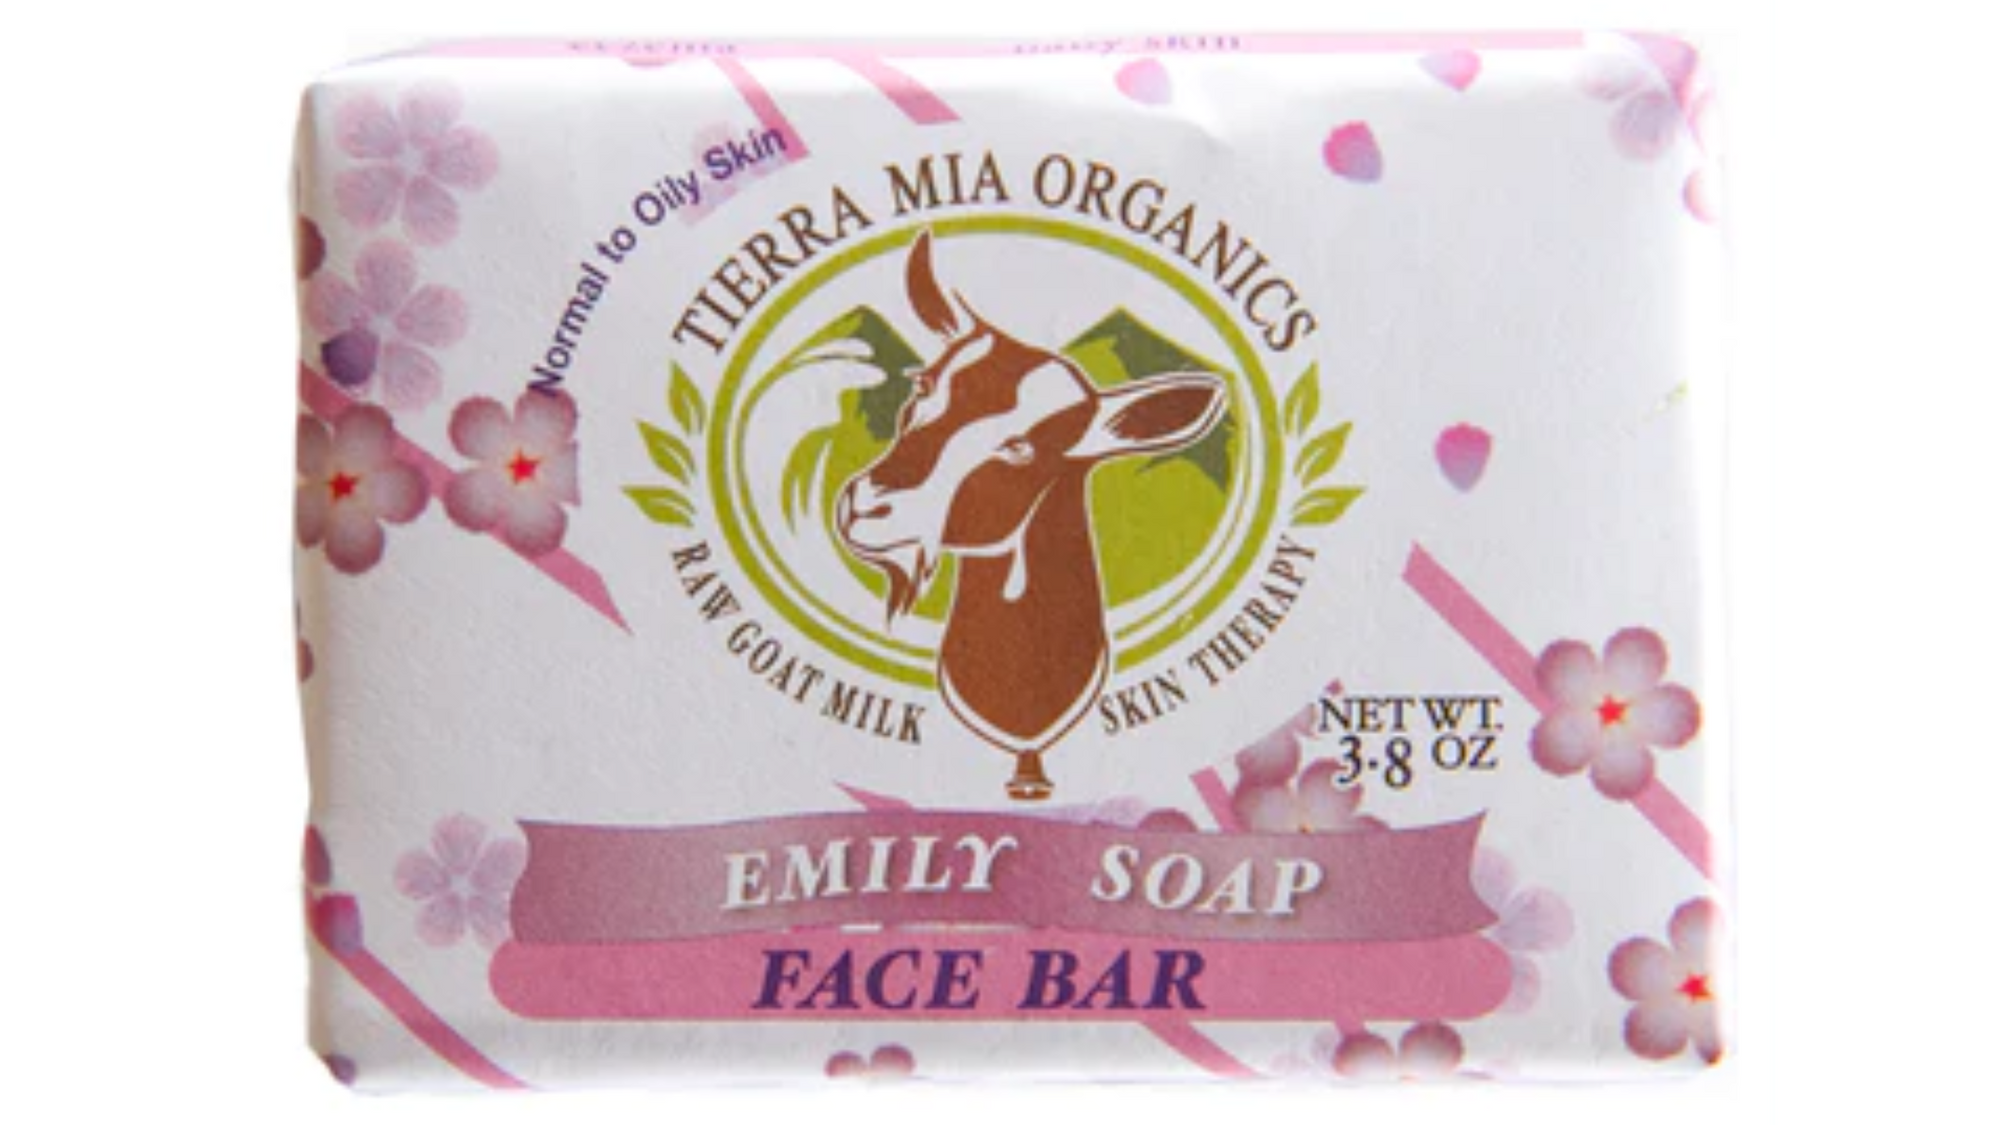 All About Emily - Tierra Mia Organics